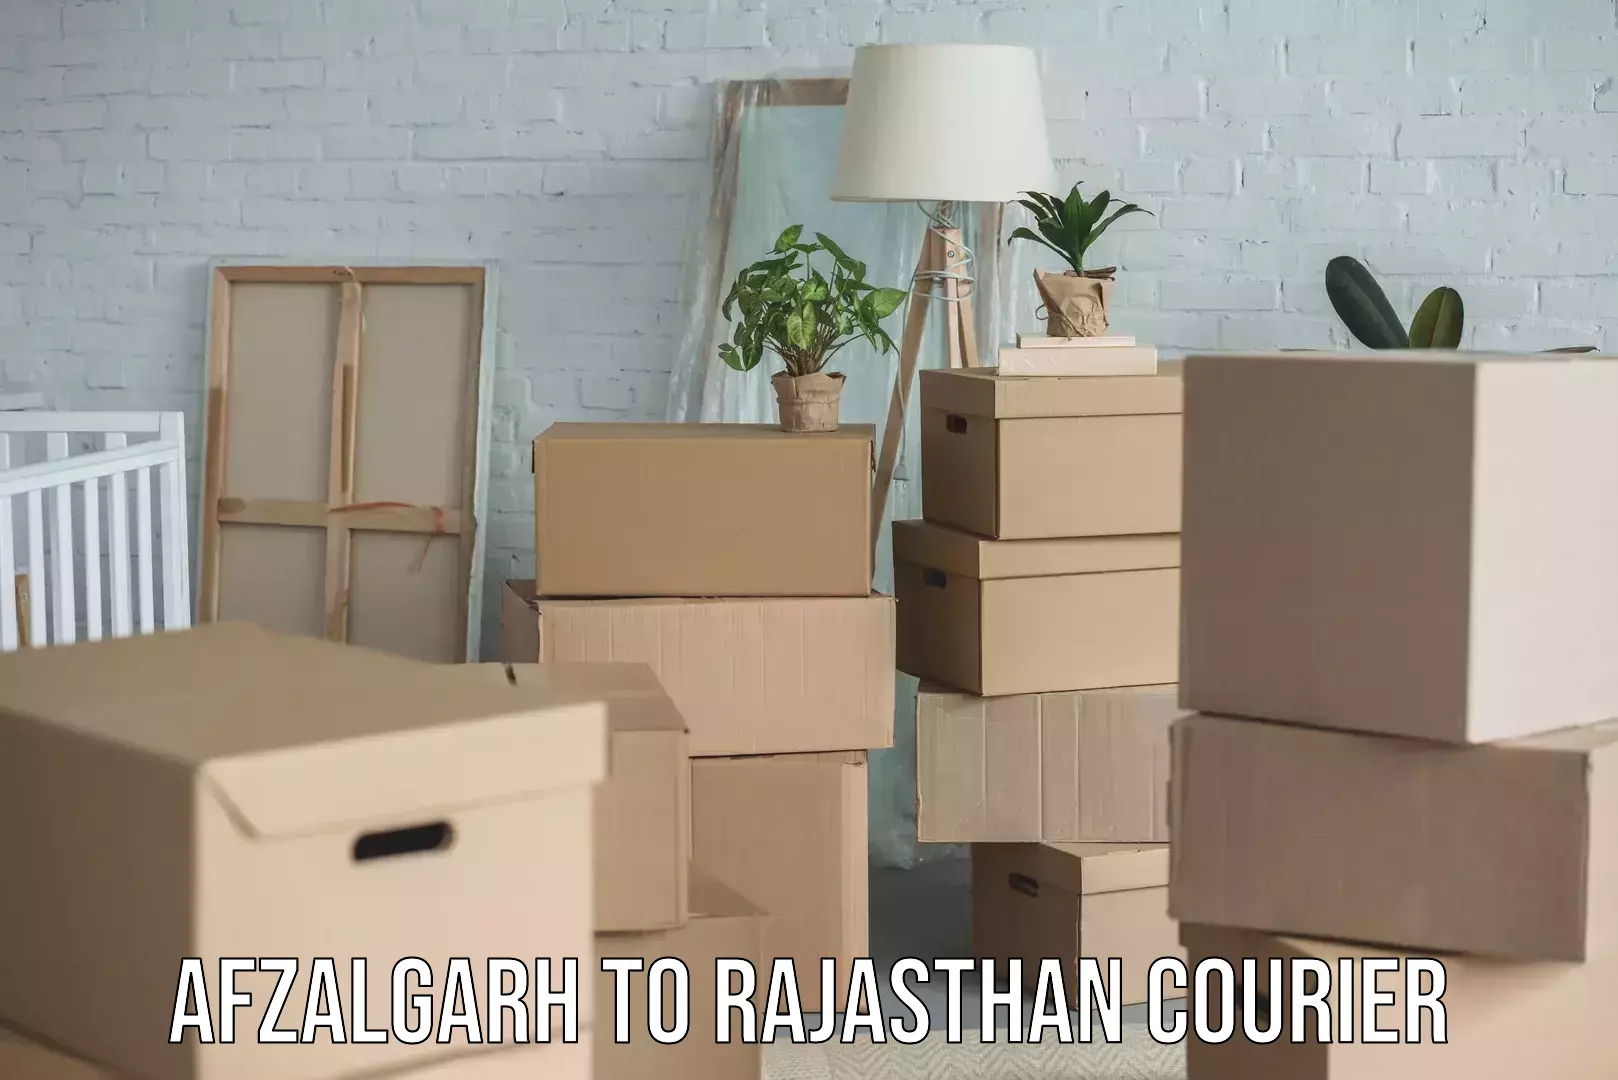 Quick dispatch service Afzalgarh to Rajasthan